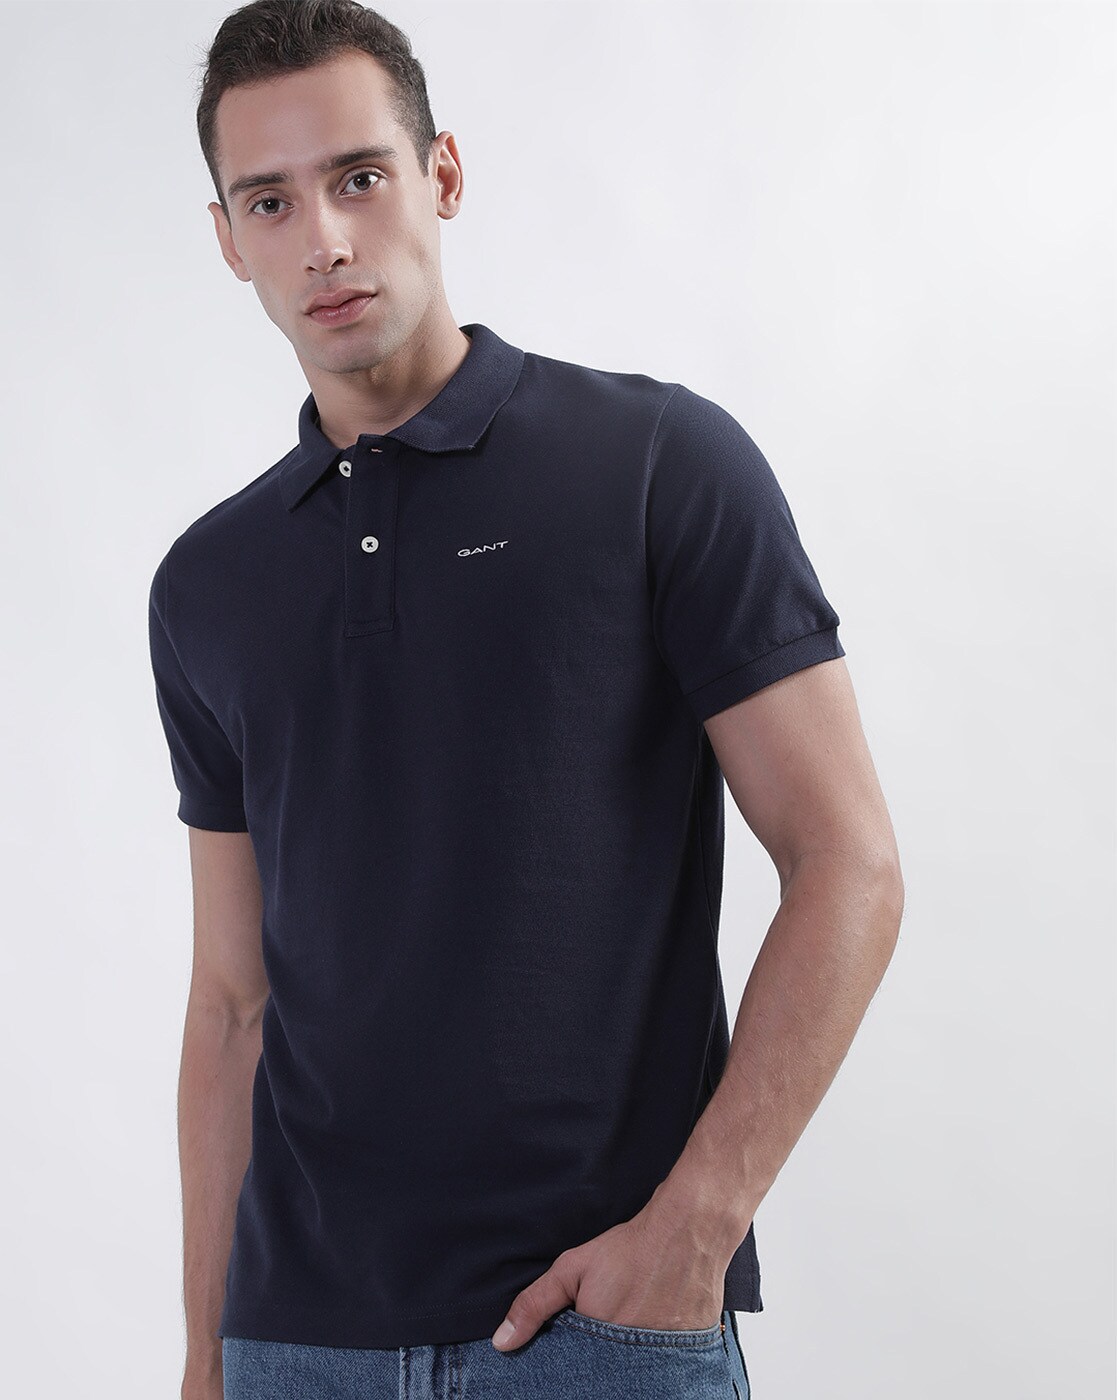 Buy Tshirts for Men by Gant | Ajio.com